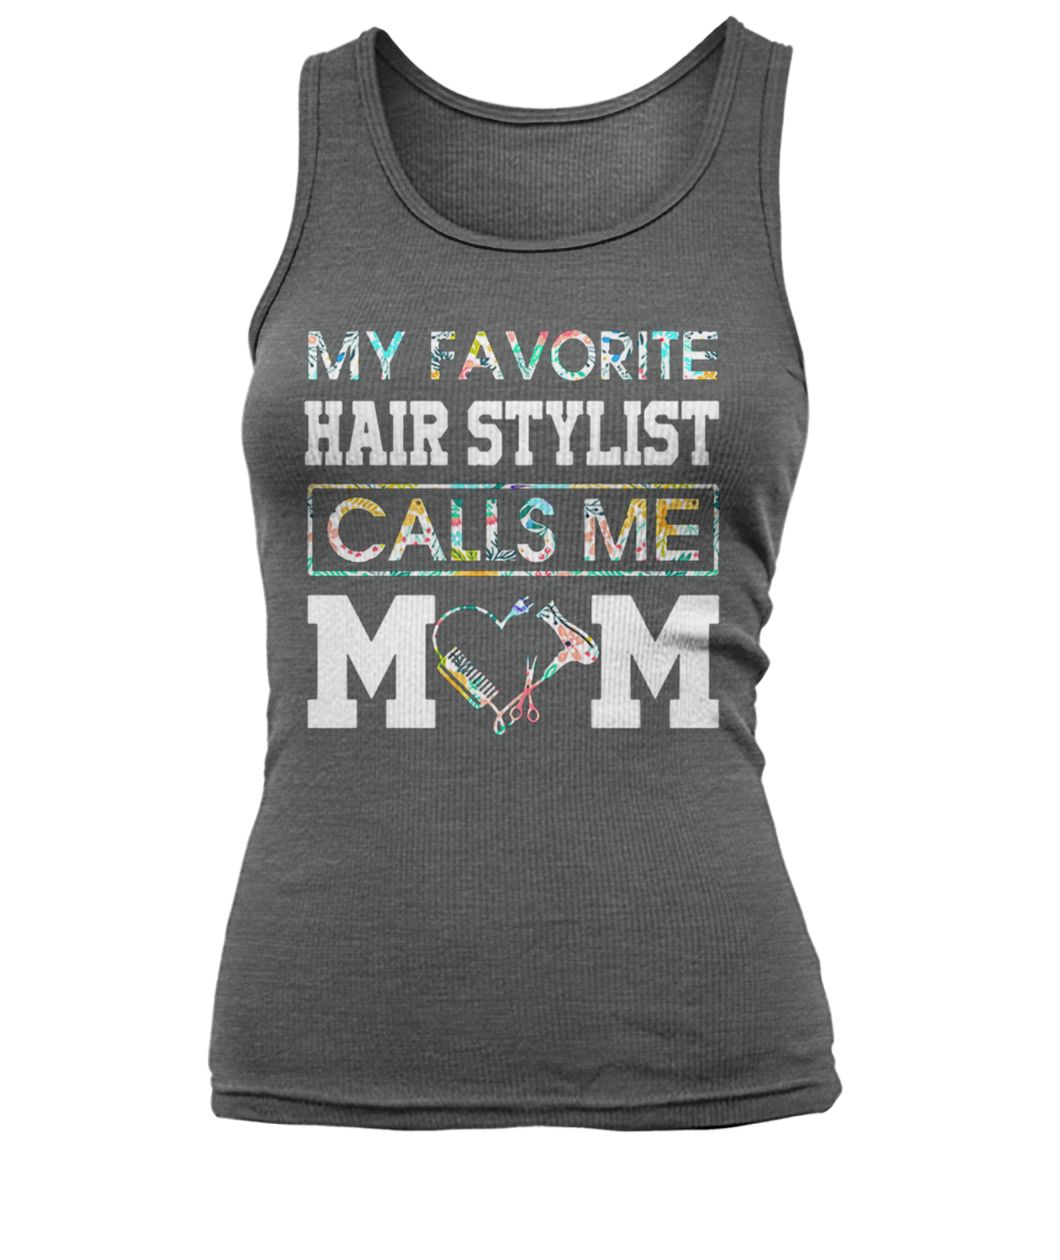 My favorite hair stylist calls me mom women's tank top